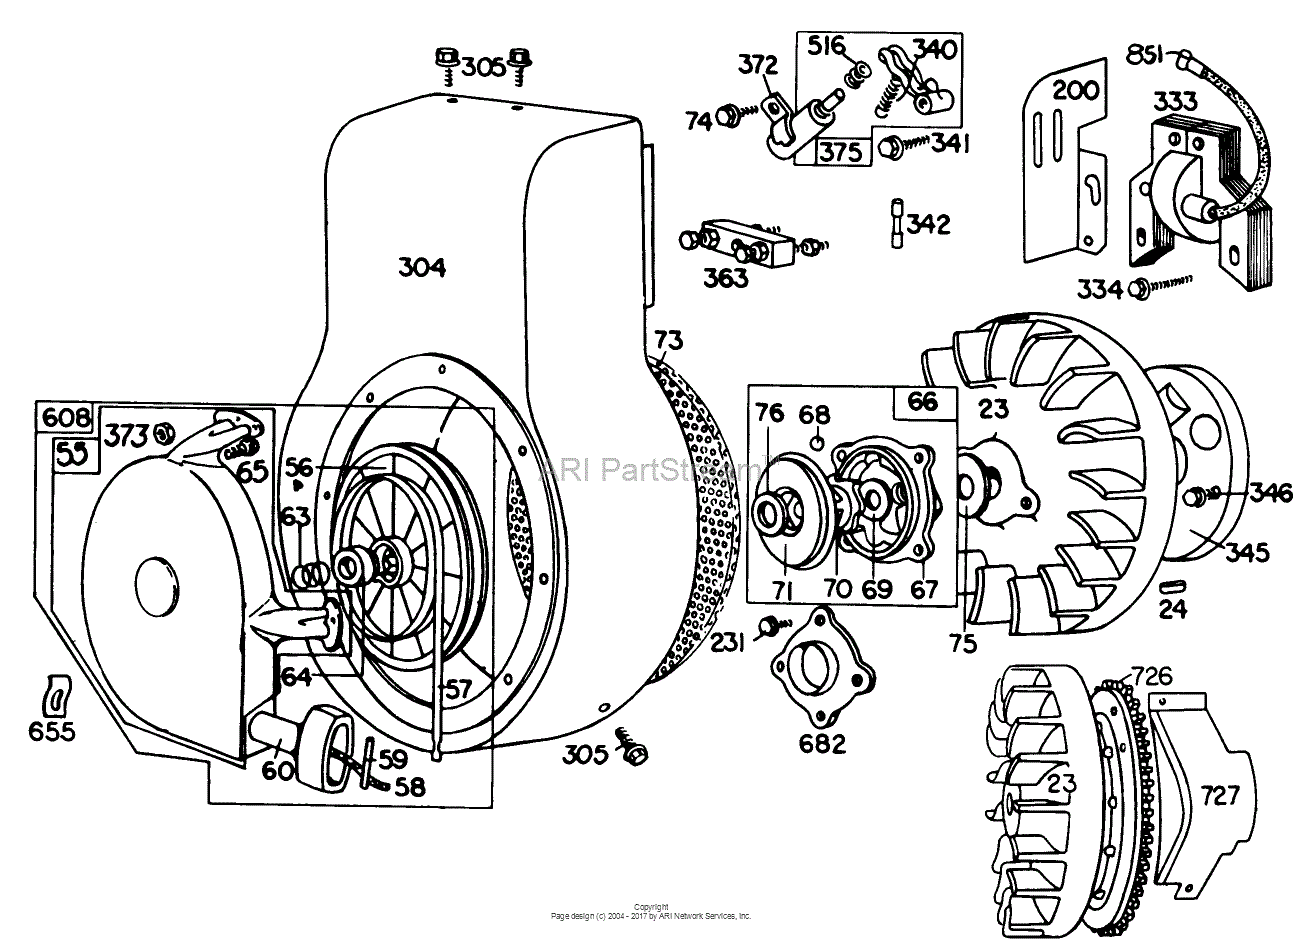 17.5 Hp Briggs And Stratton Engine Parts Diagram 55